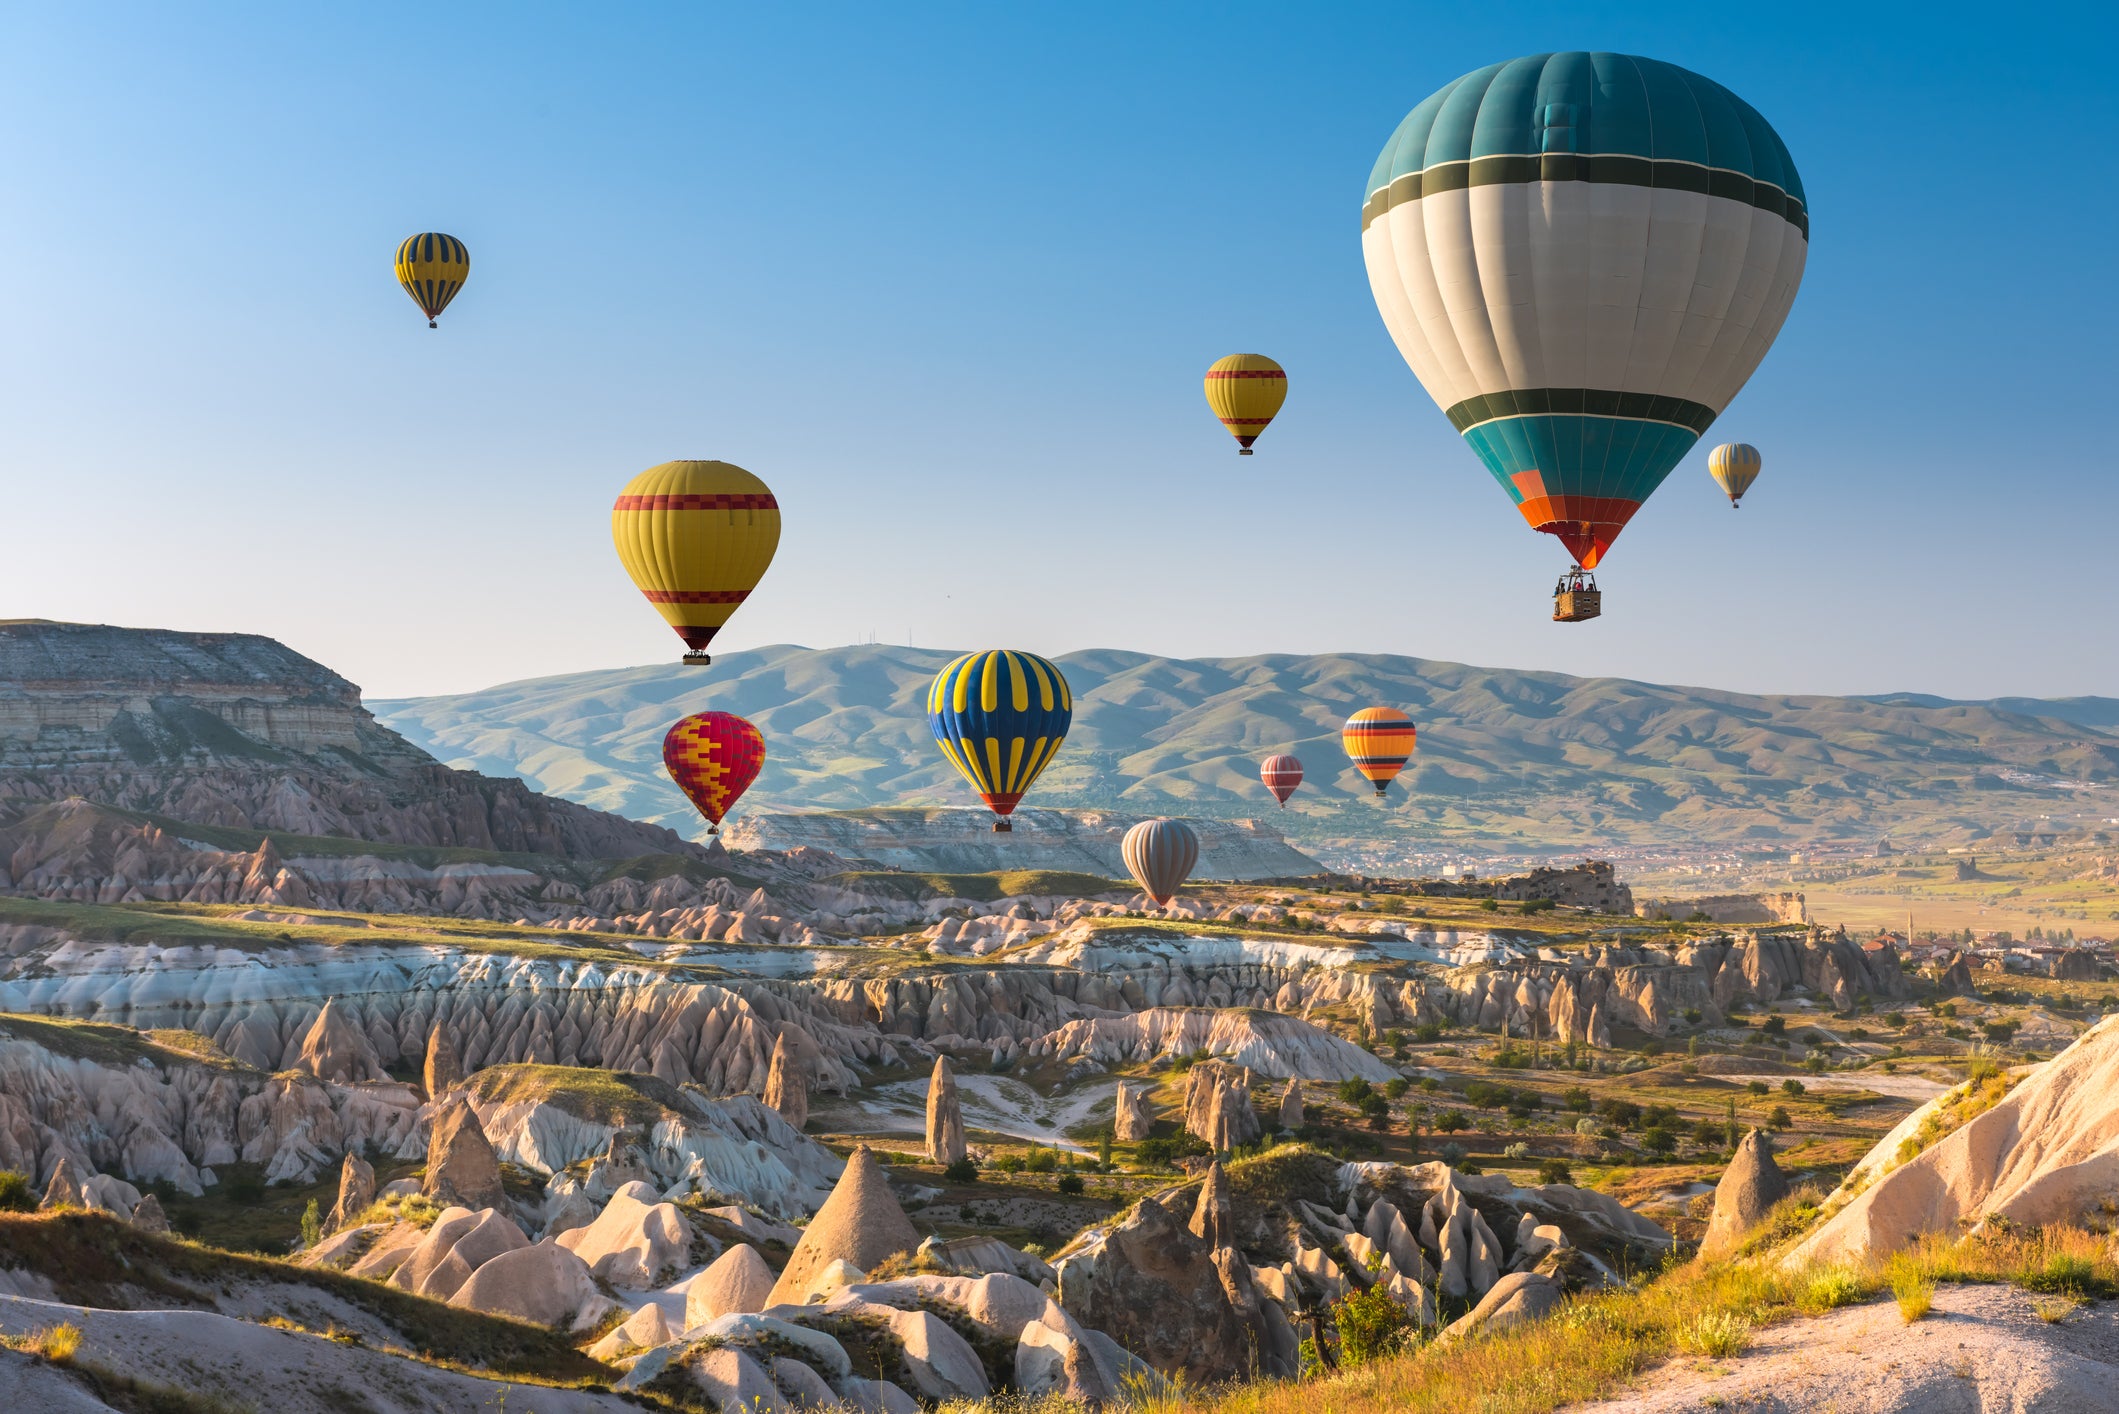 Holiday hotspot Cappadocia, in Turkey